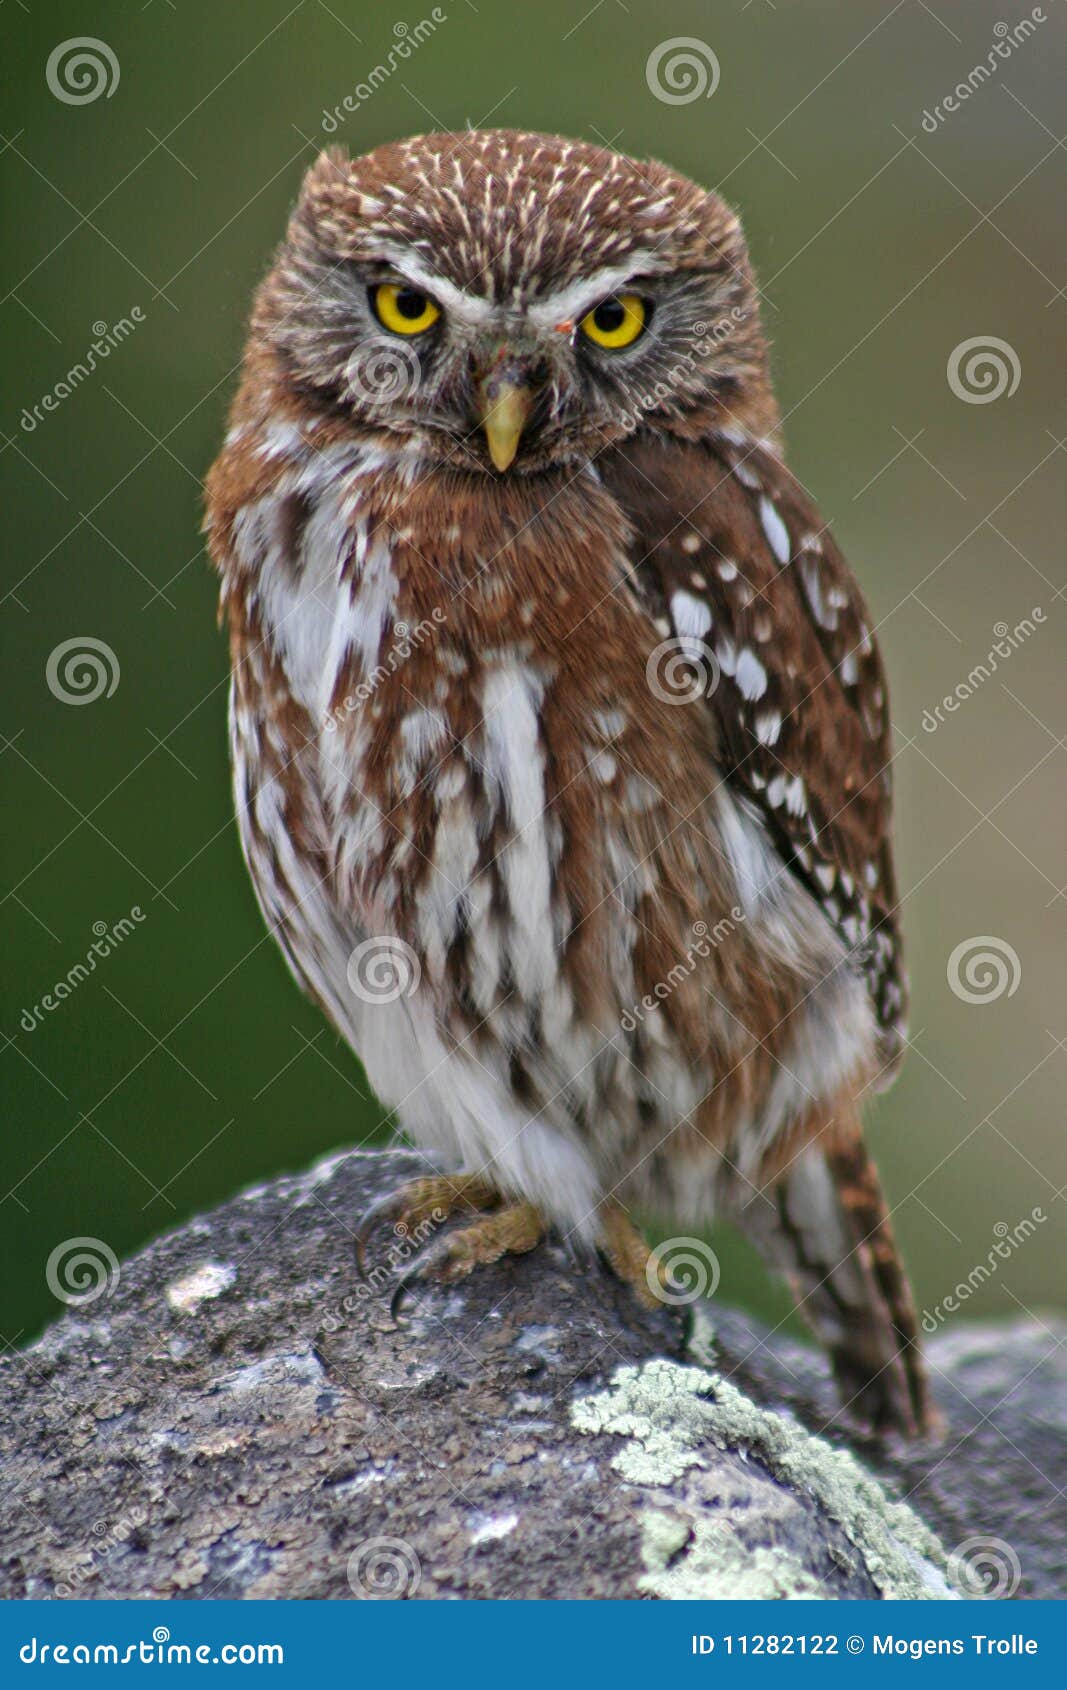 austral pygmy owl, patagonia, argentina